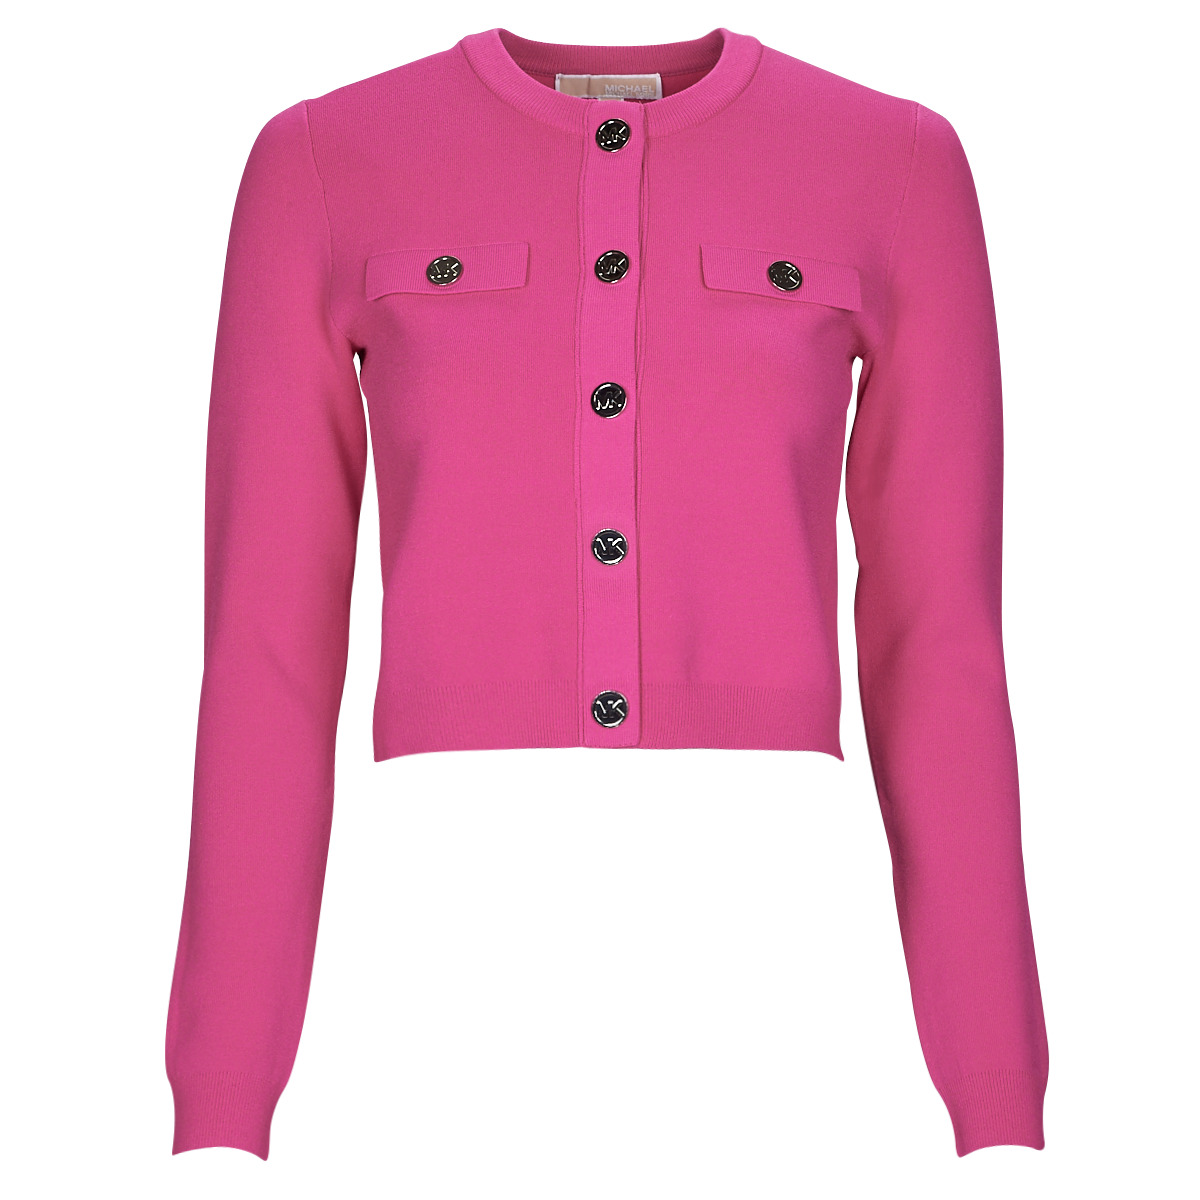 Clothing Women Jackets / Cardigans MICHAEL Michael Kors ECO SNAP CROP JKT Pink